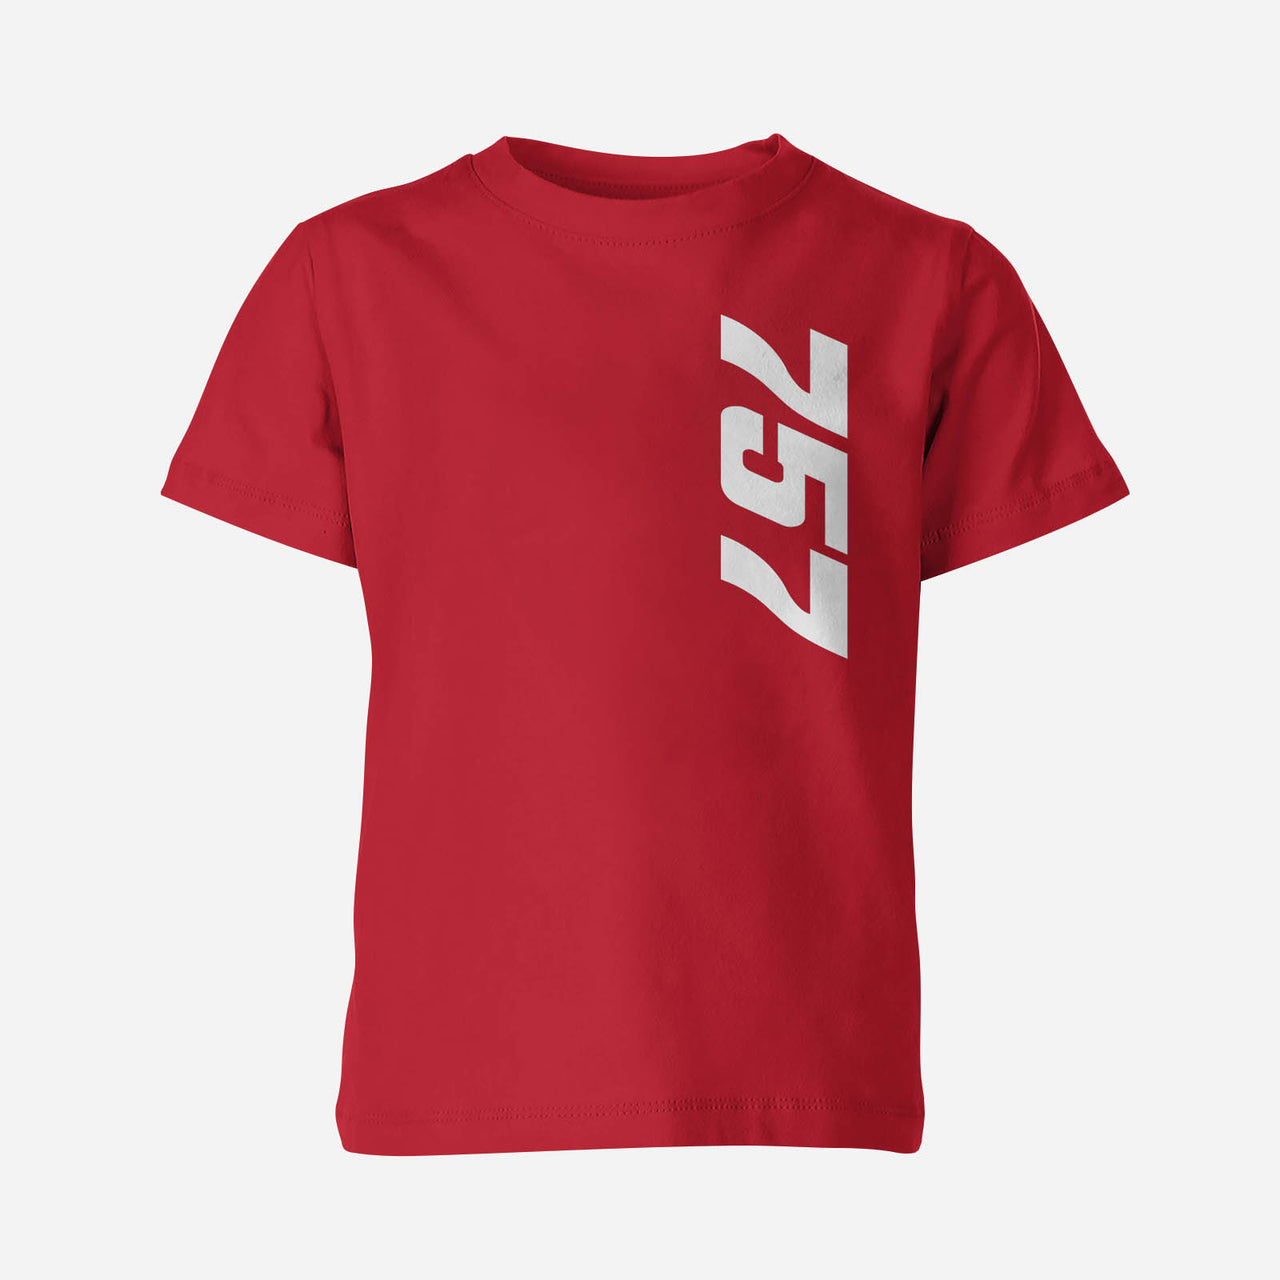 757 Side Text Designed Children T-Shirts